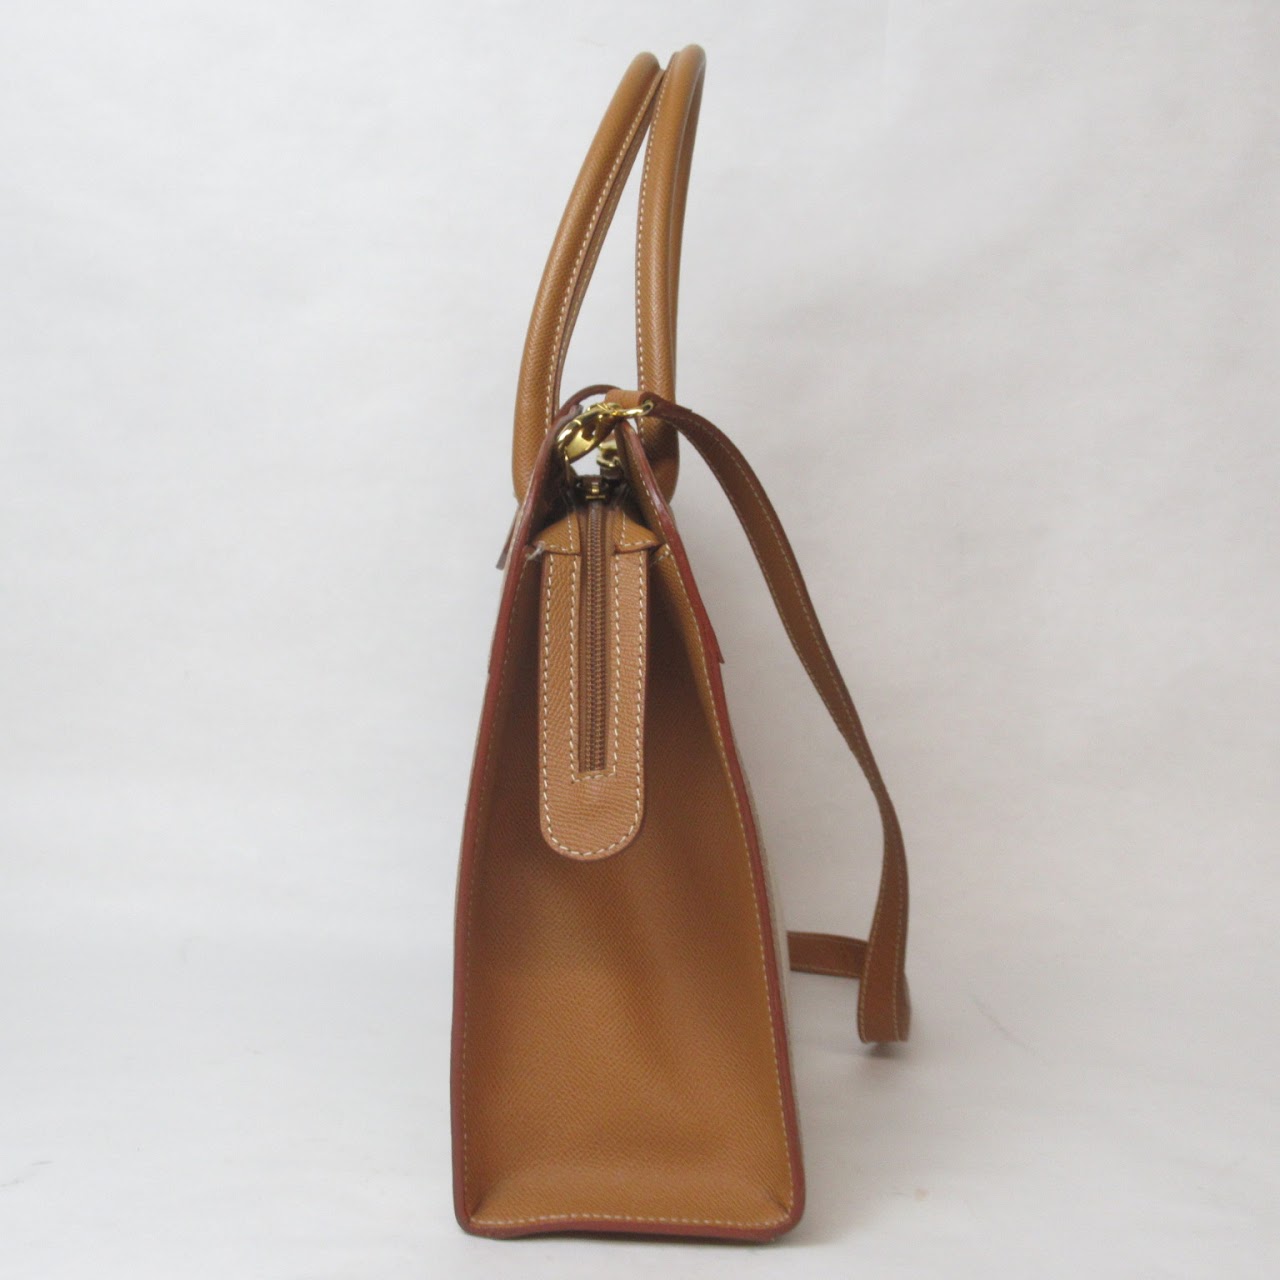 Renè Canvas & Leather Handbag